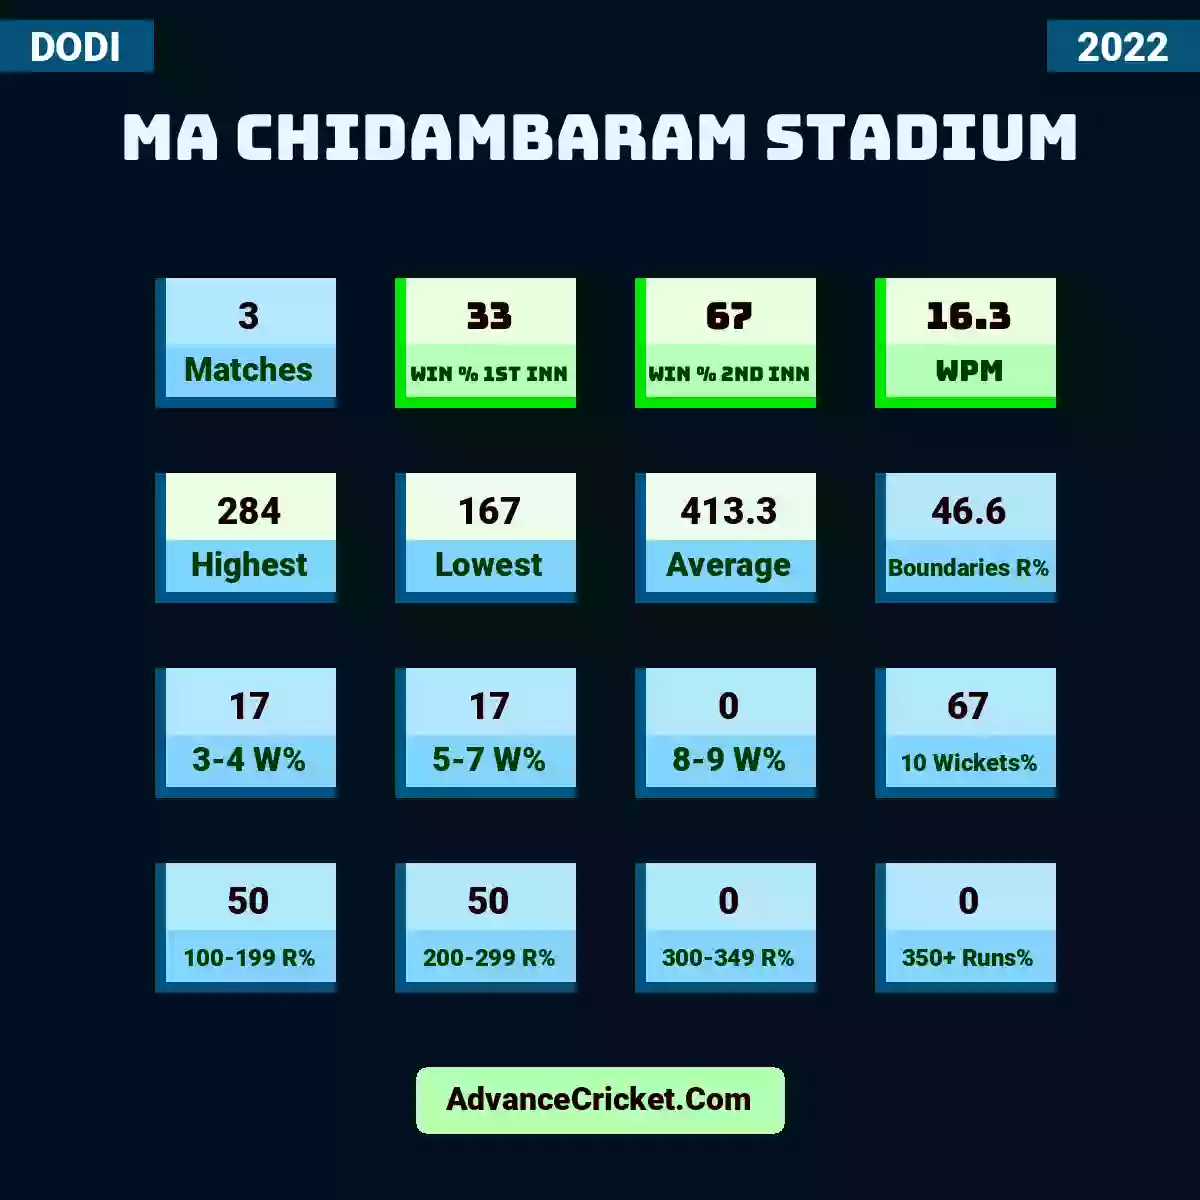 Image showing MA Chidambaram Stadium with Matches: 3, Win % 1st Inn: 33, Win % 2nd Inn: 67, WPM: 16.3, Highest: 284, Lowest: 167, Average: 413.3, Boundaries R%: 46.6, 3-4 W%: 17, 5-7 W%: 17, 8-9 W%: 0, 10 Wickets%: 67, 100-199 R%: 50, 200-299 R%: 50, 300-349 R%: 0, 350+ Runs%: 0.